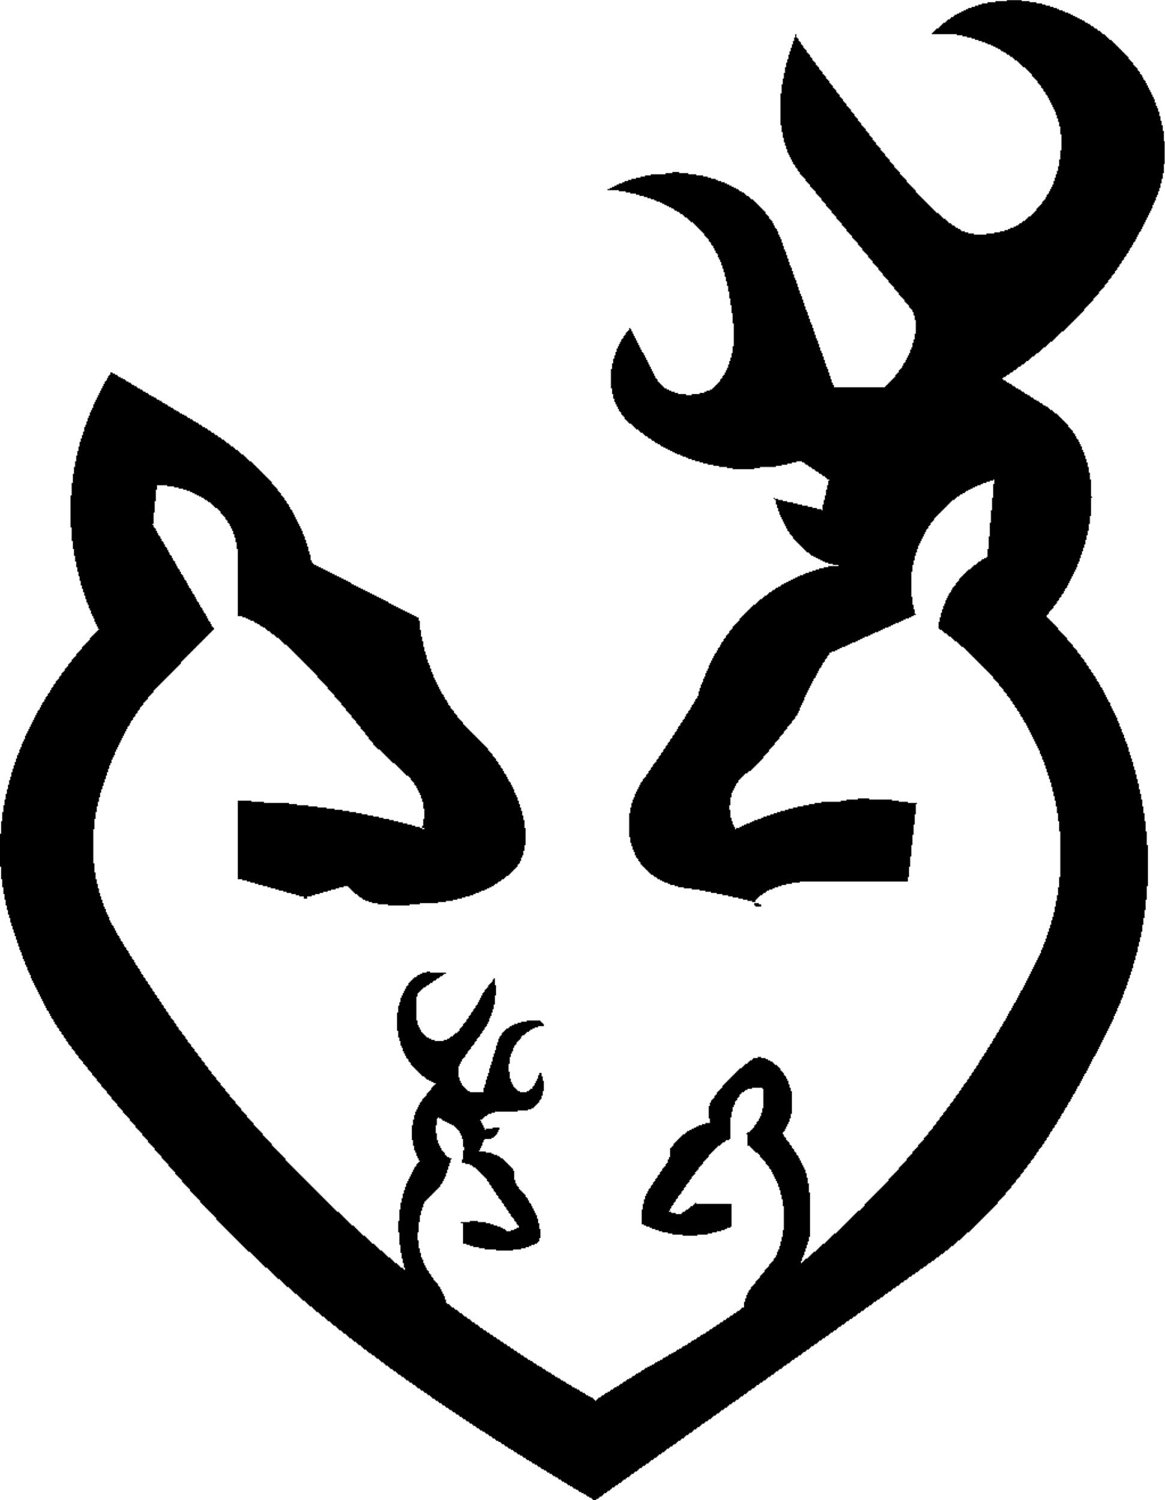 Free Browning Deer Logo Pictures, Download Free Clip Art.